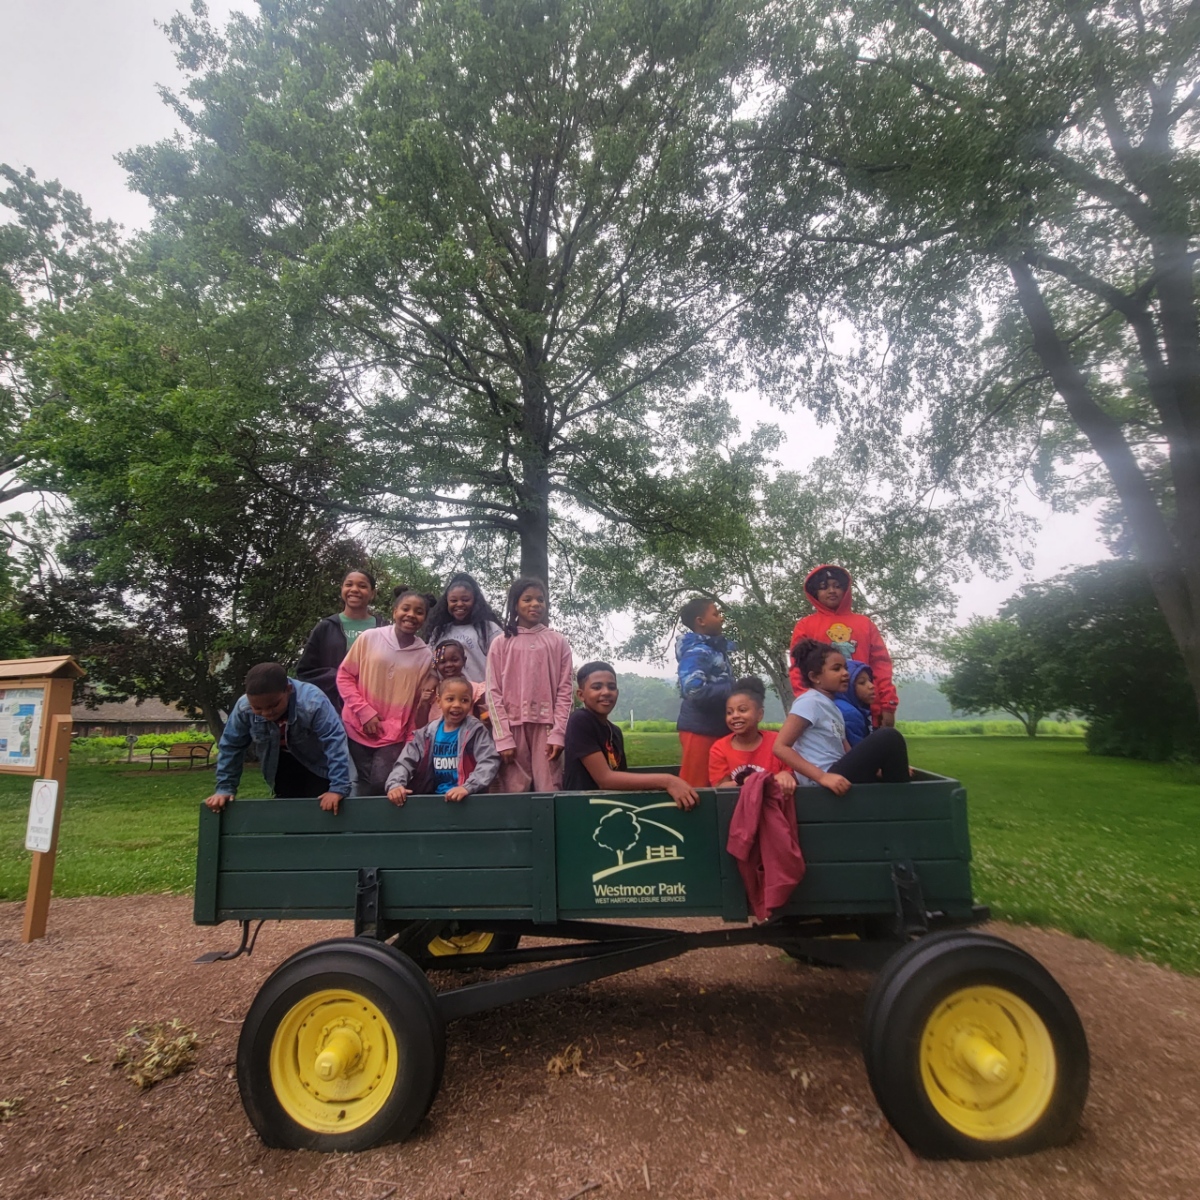 Children in Farm Cart at Park